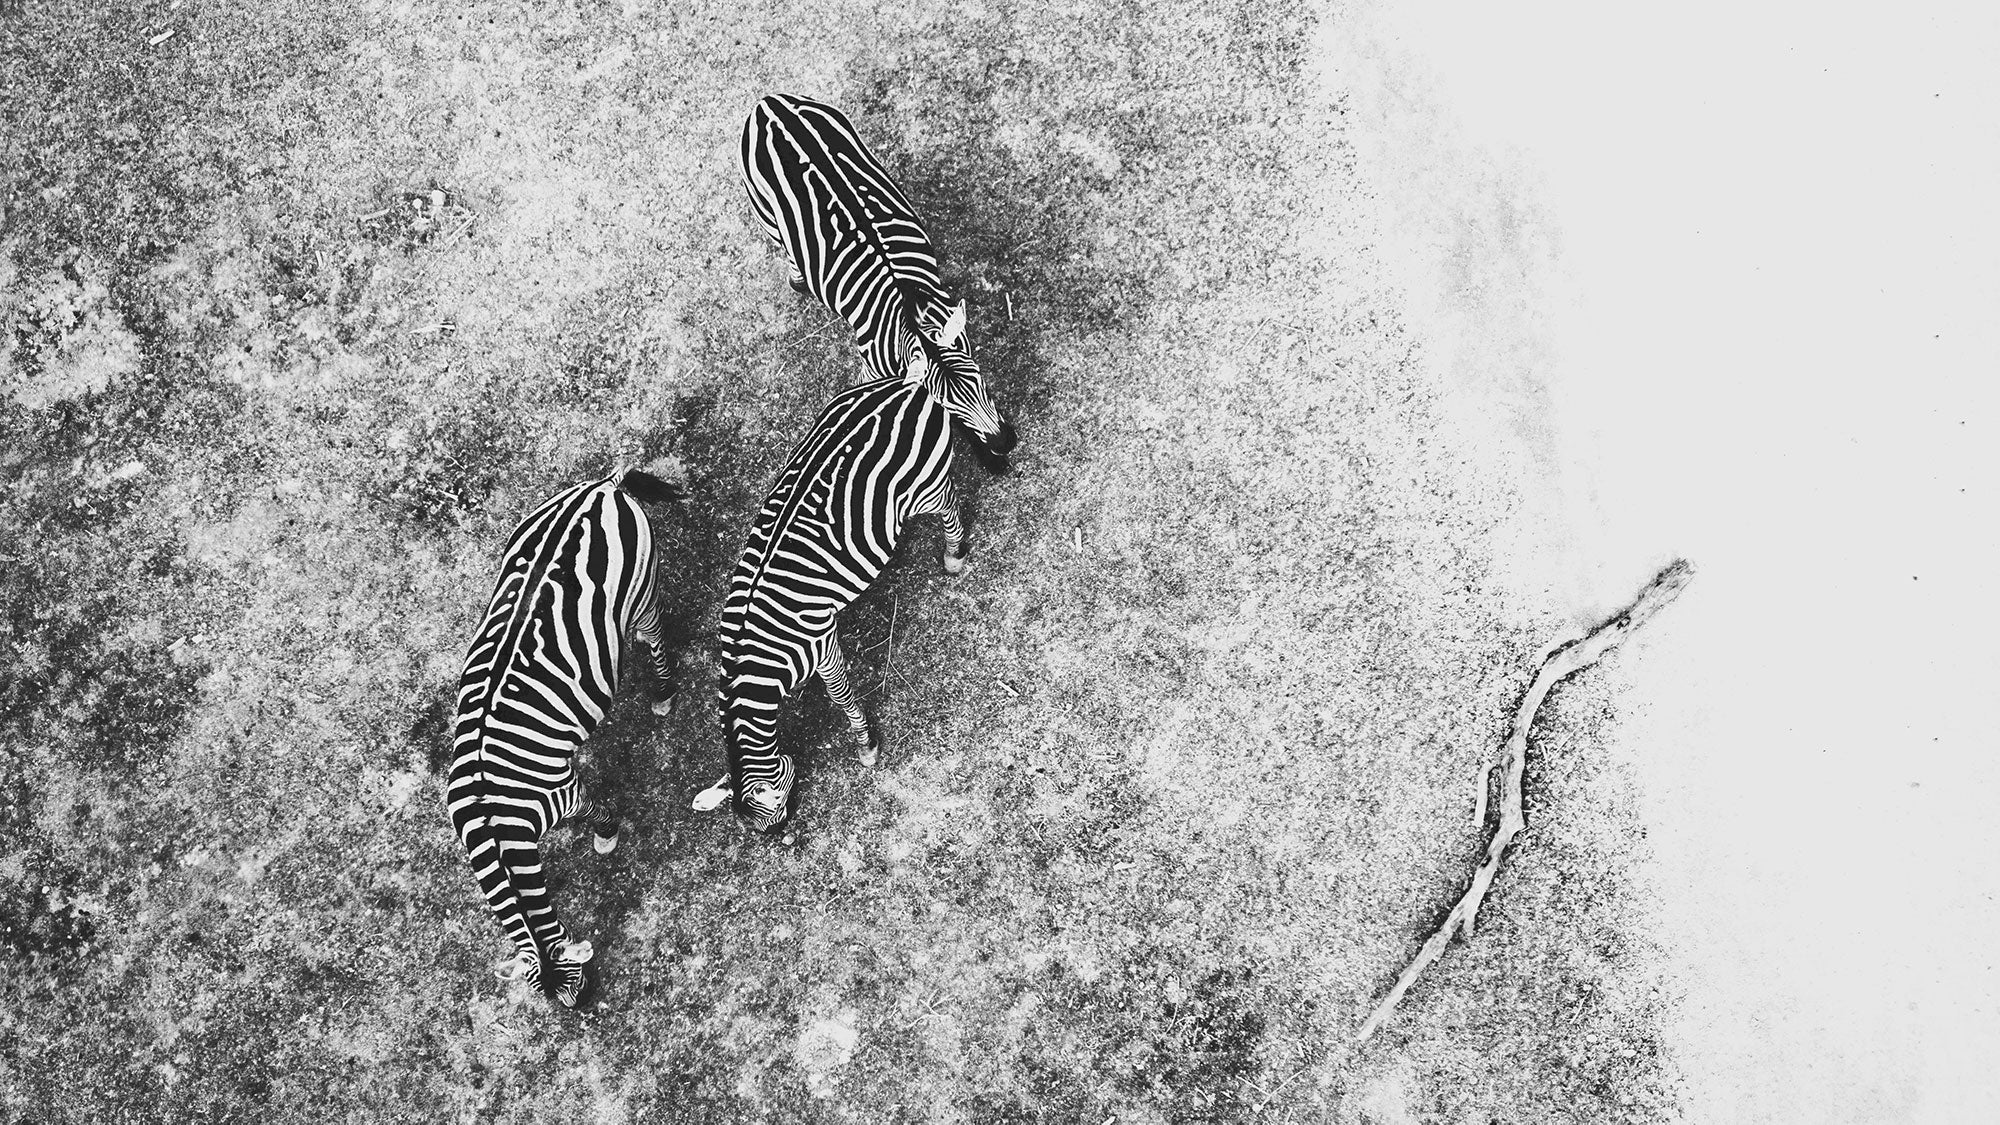 Zebras, Africa Roam Cape Town 